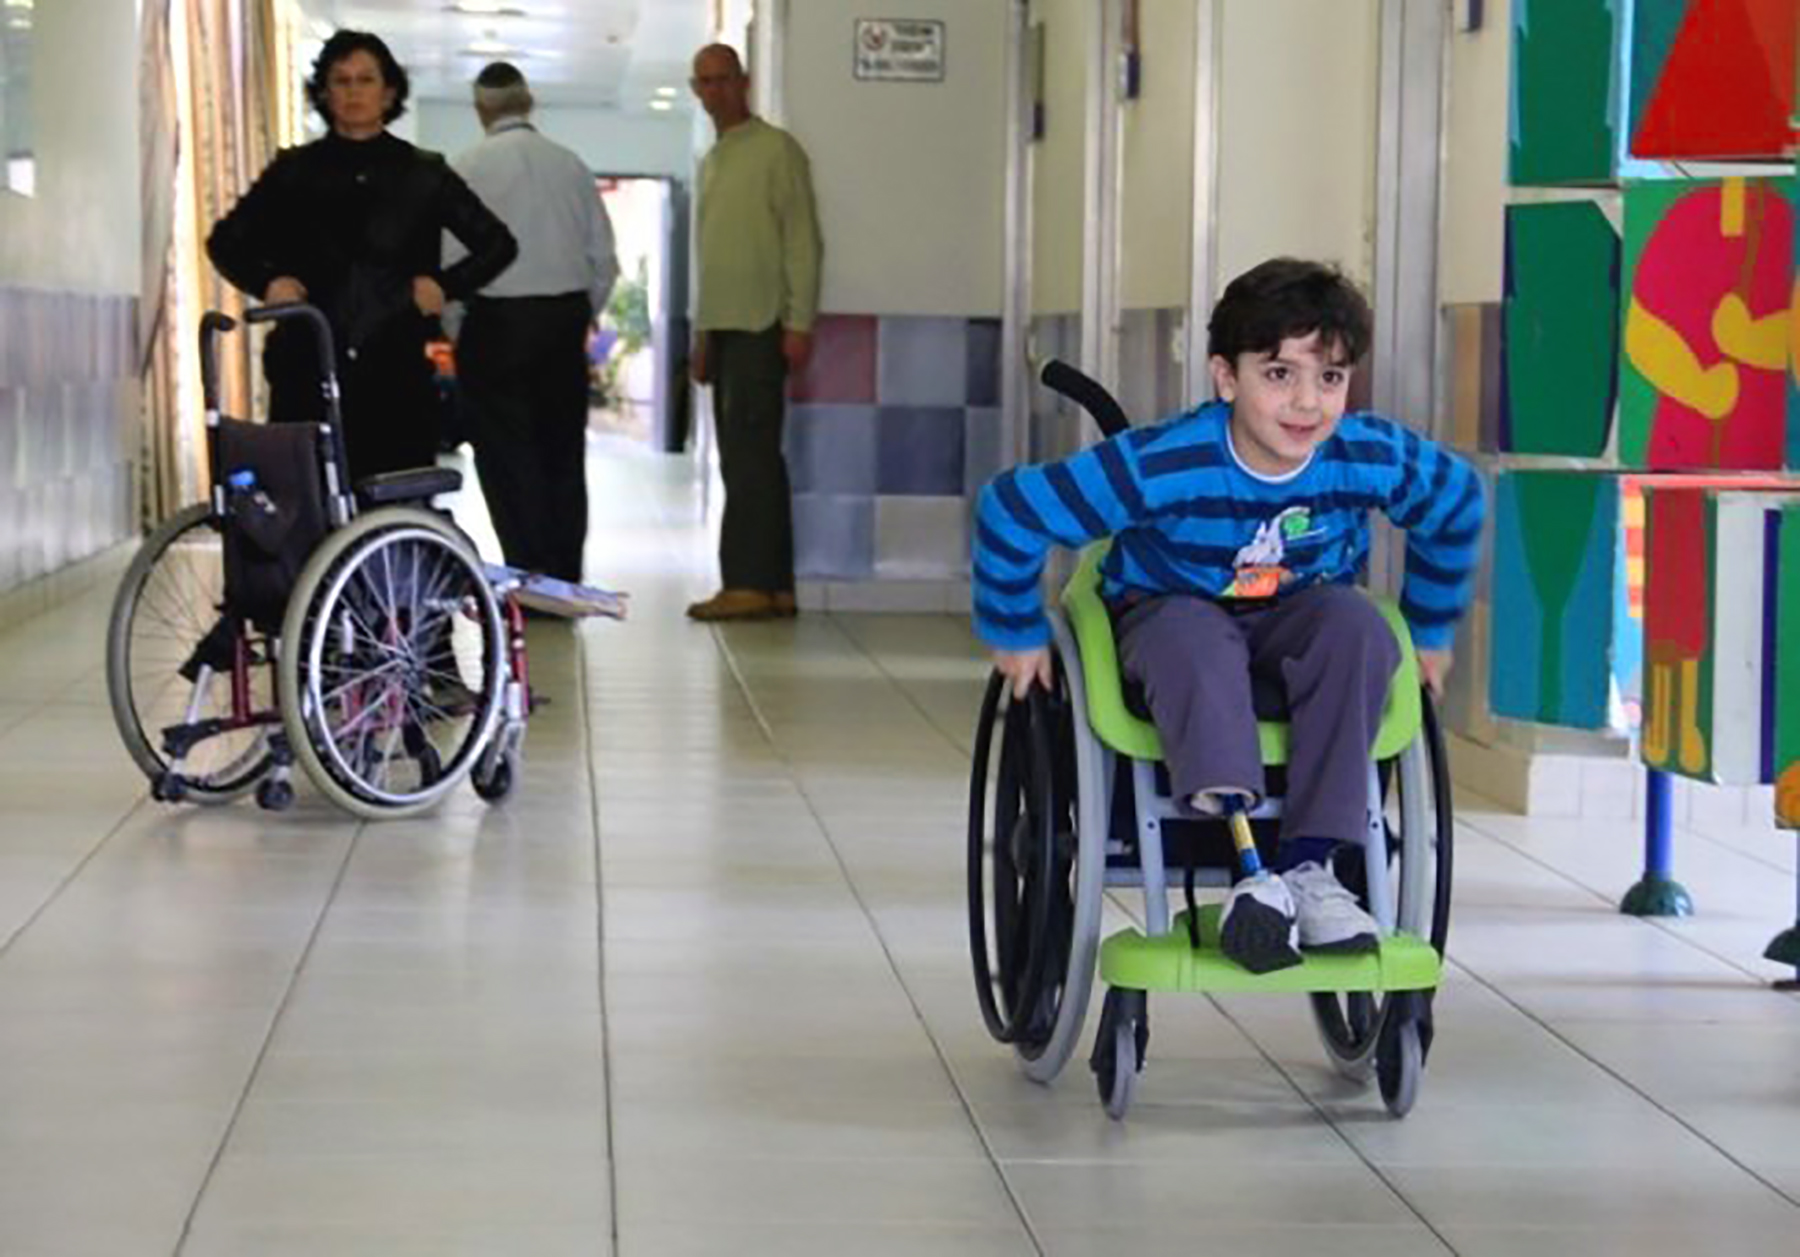 Добавка дети инвалиды. Дети инвалиды. Ребенок в инвалидной коляске. Коляска для детей инвалидов. Дети инвалиды колясочники.